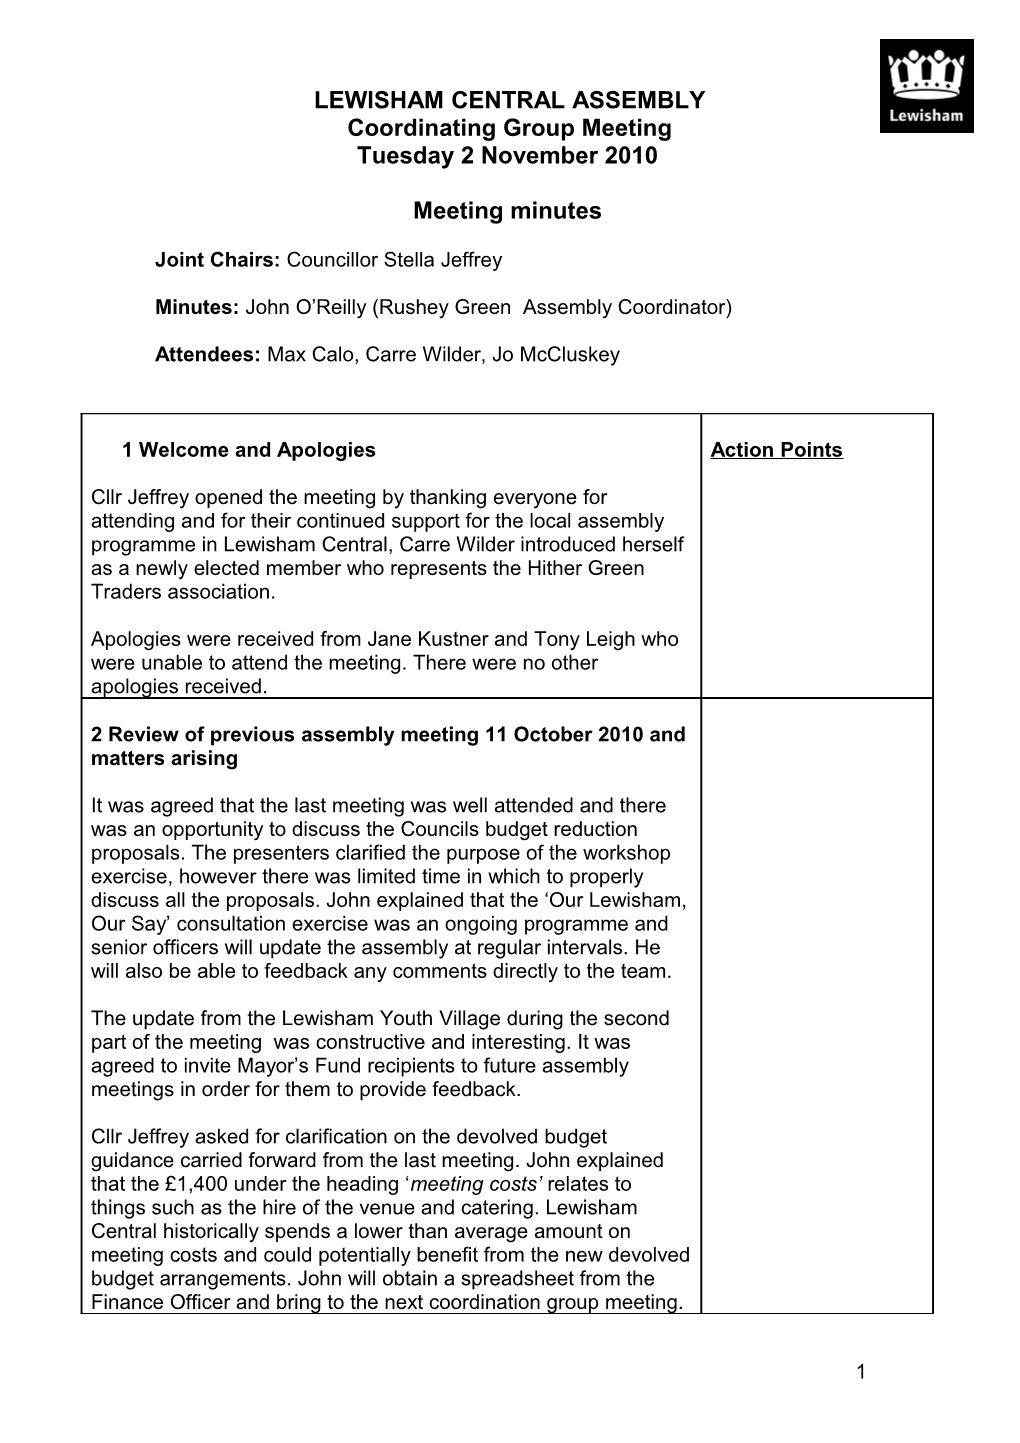 Lewisham Central Assembly Coordinating Group 02 November 2010 Minutes